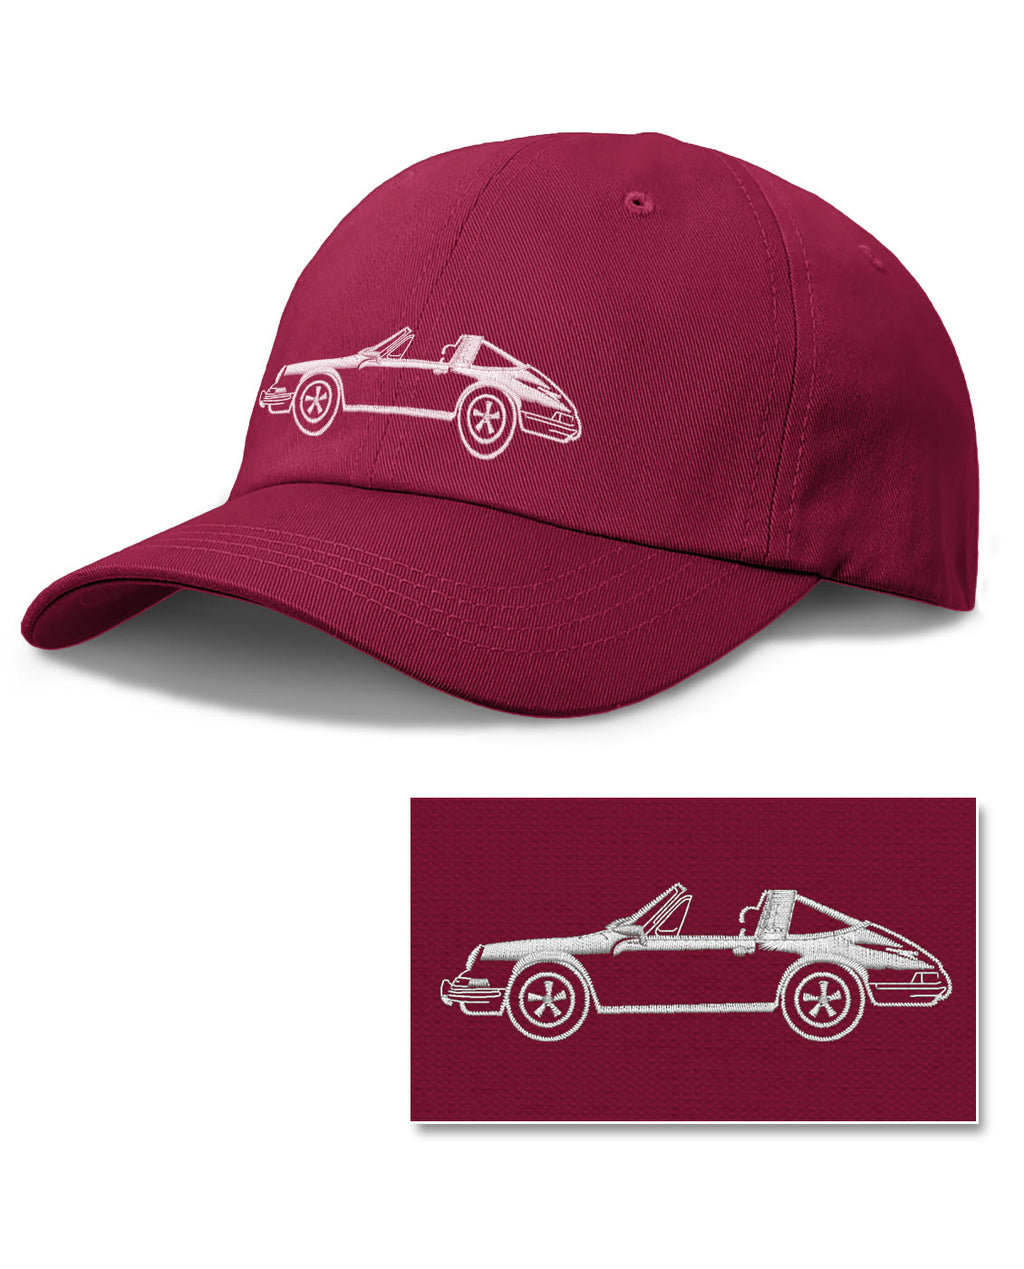 Porsche 911 Targa - Baseball Cap for Men & Women - Side View